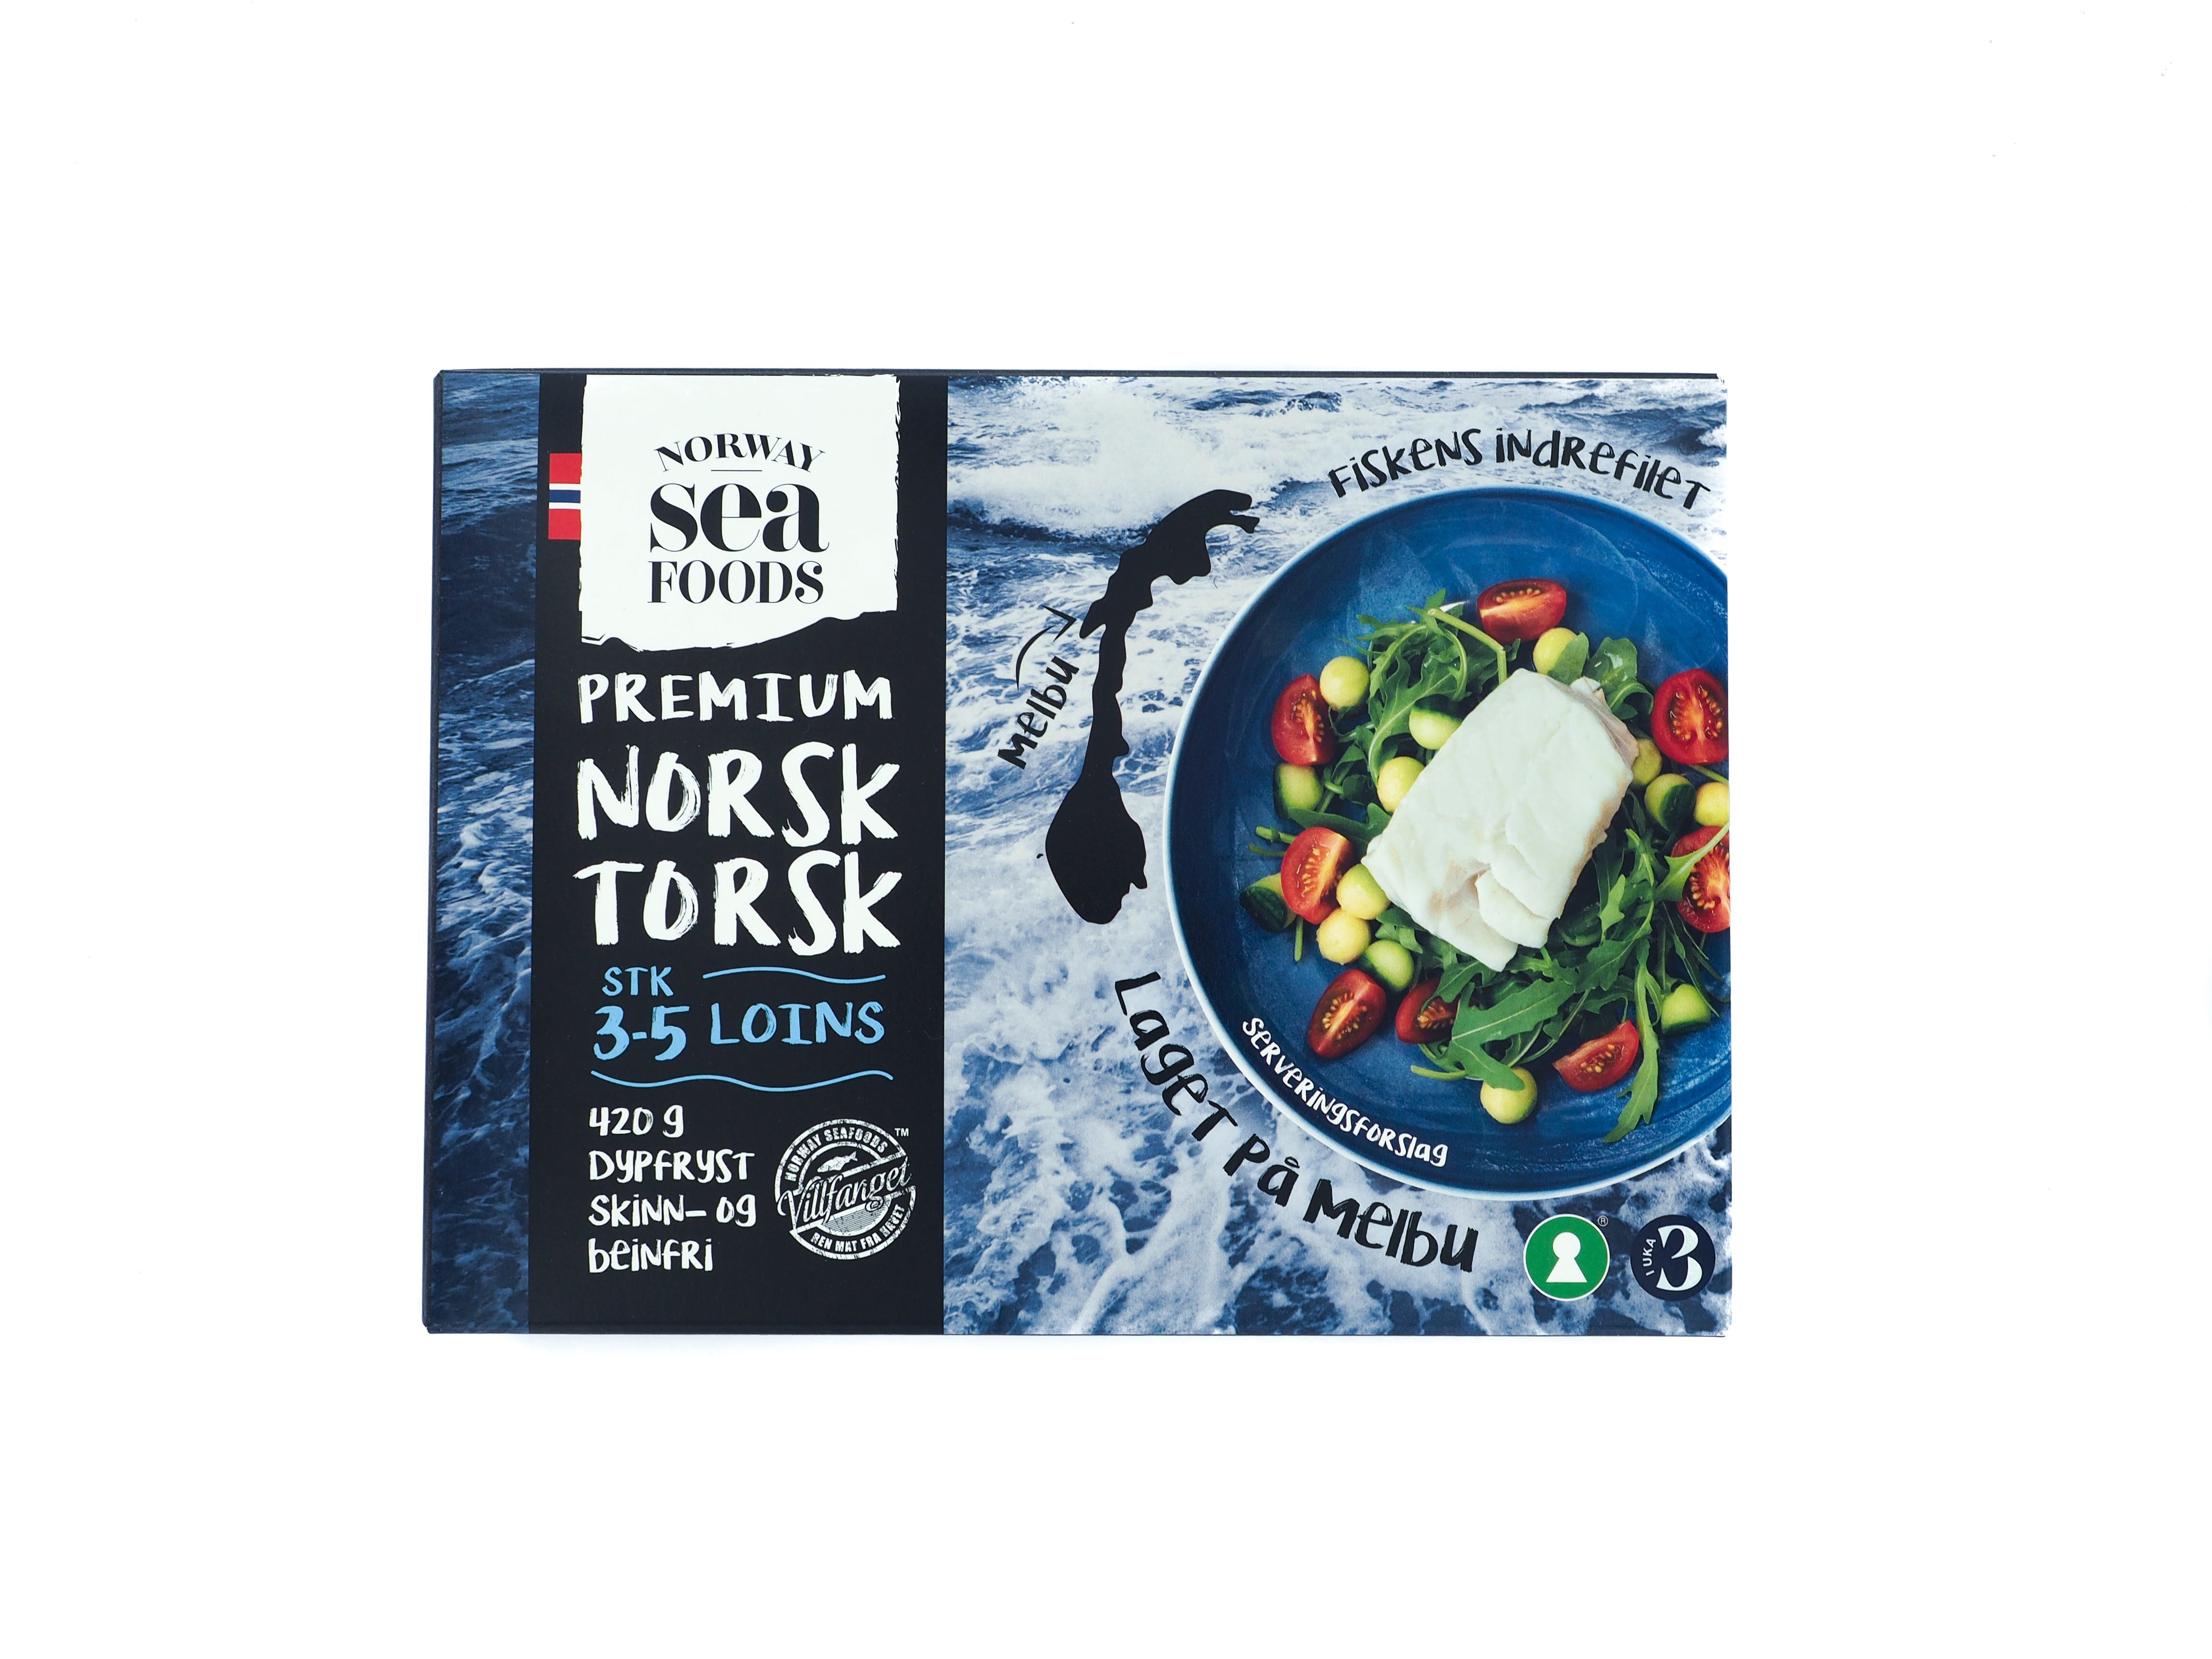 Premium Norsk torsk